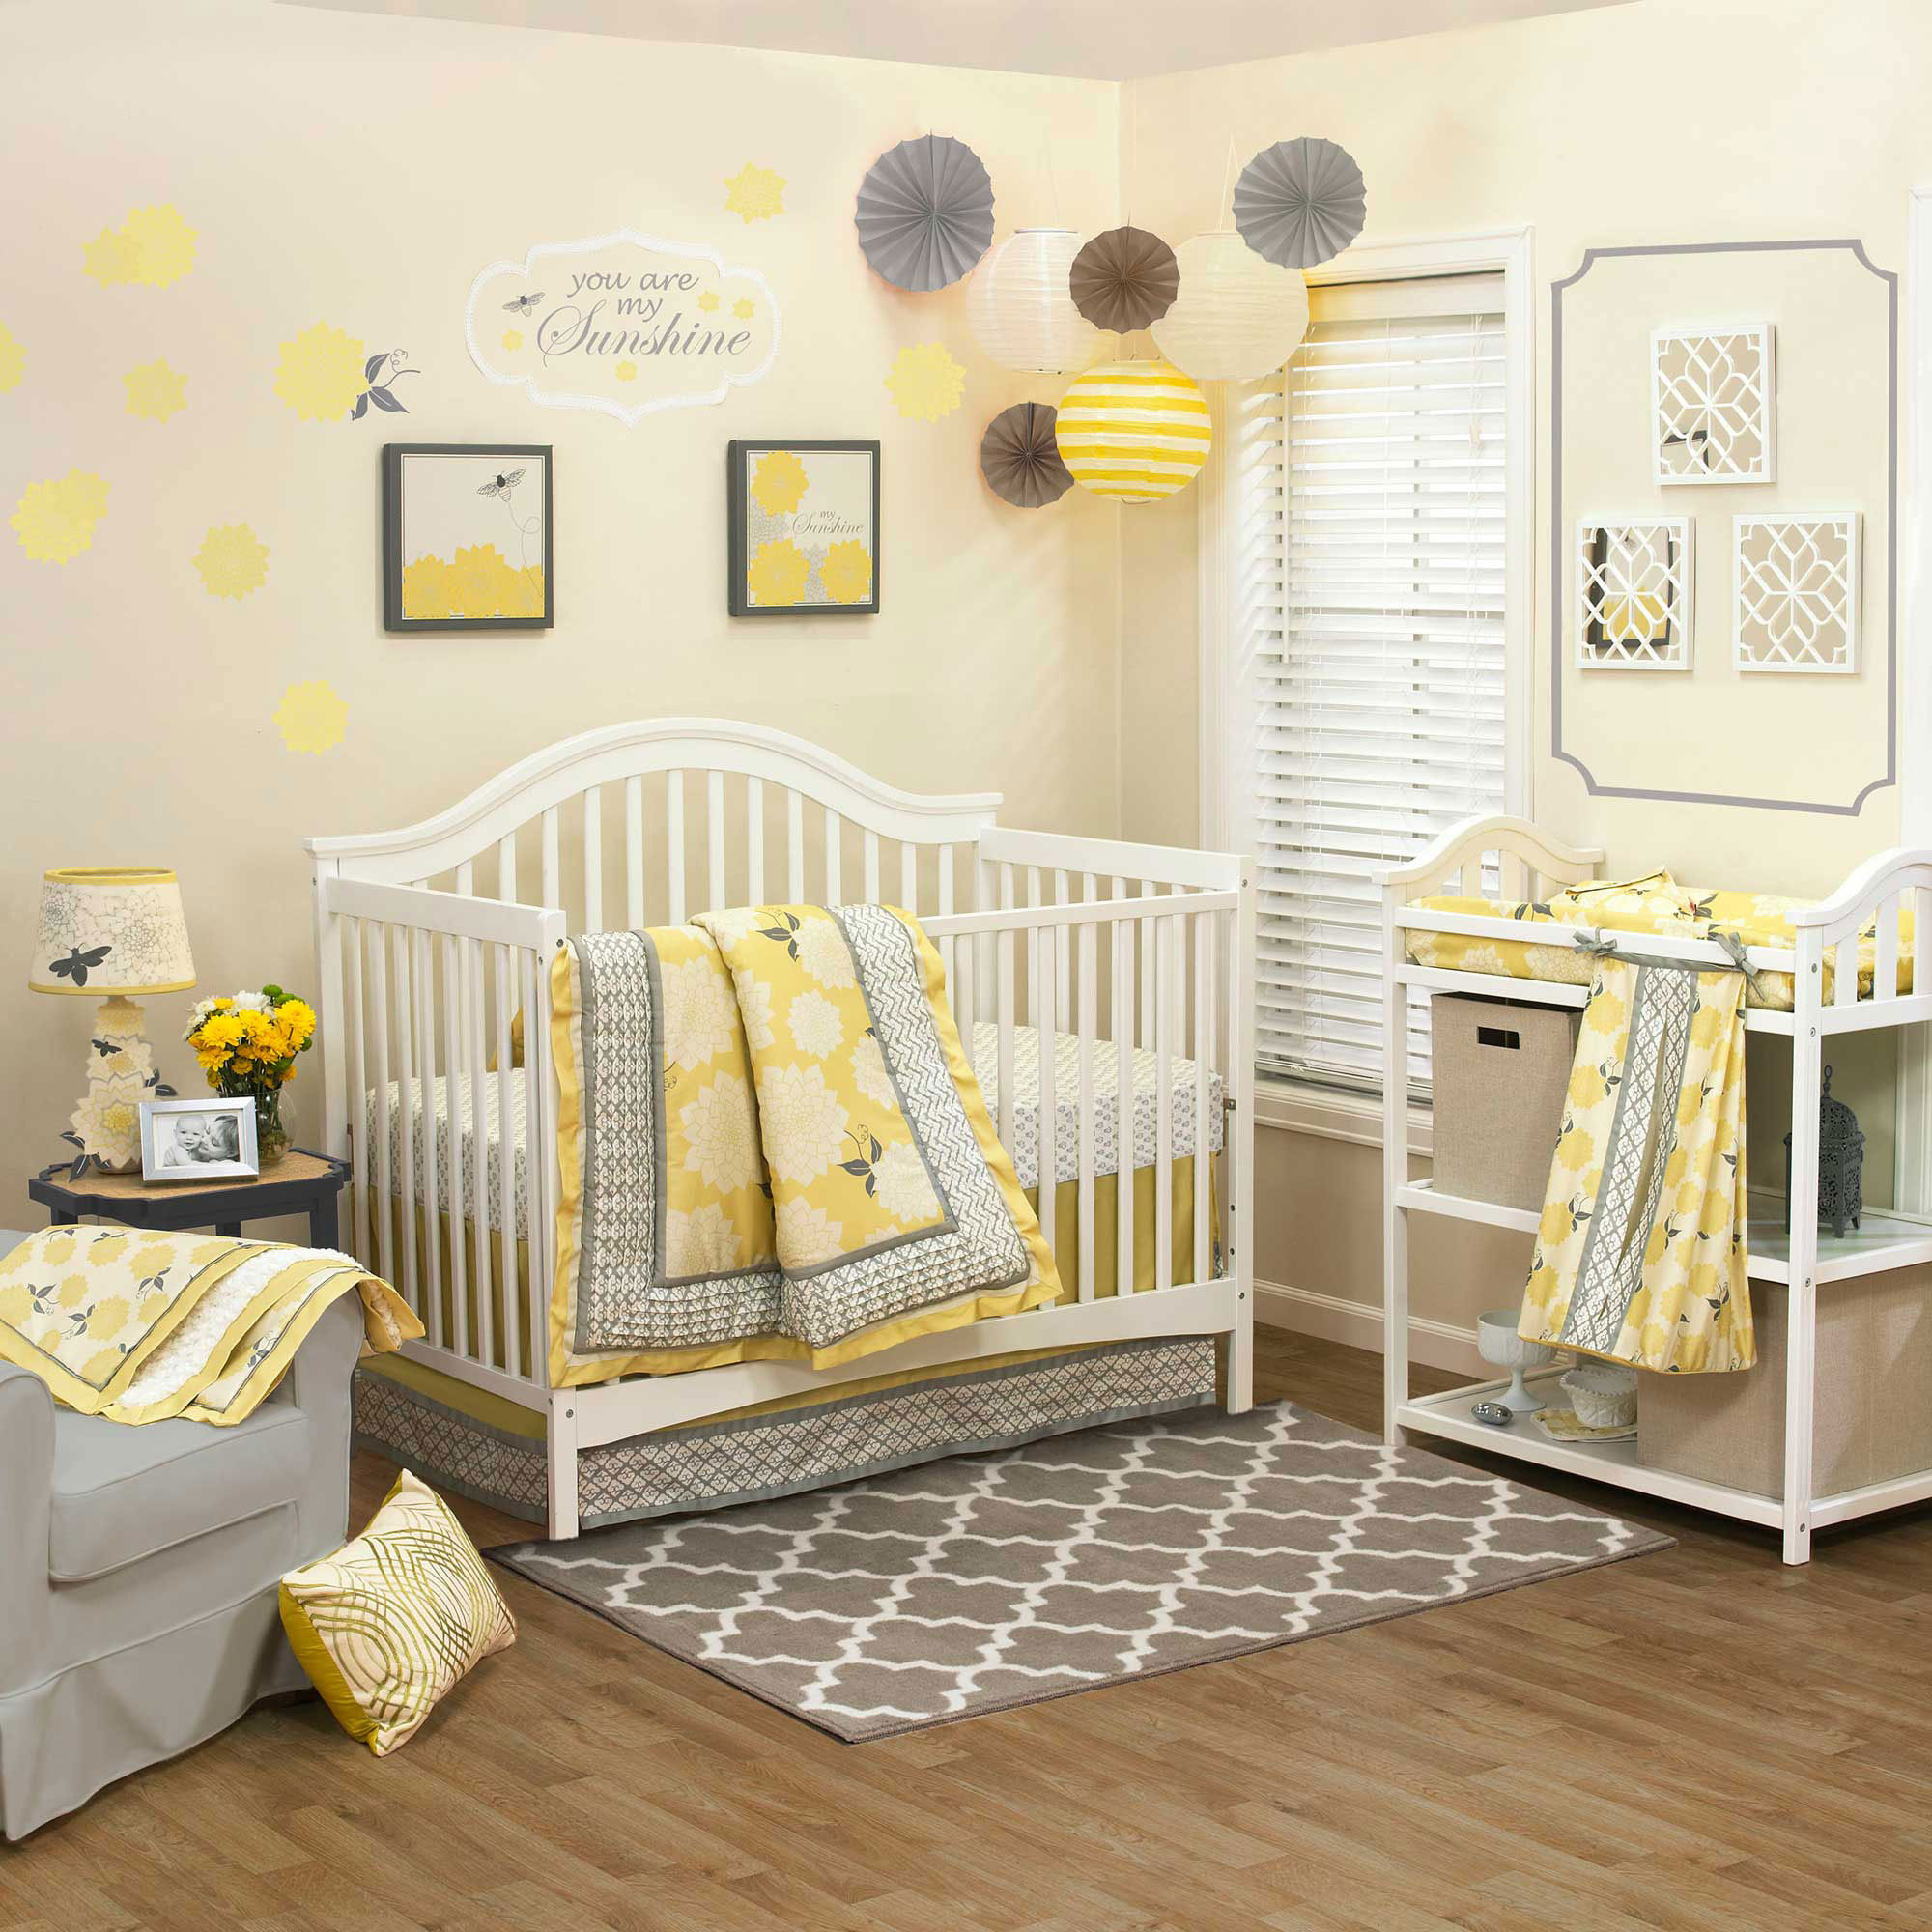 Baby Girl Nursery Decorating Ideas
 Baby Girl Nursery Ideas 10 Pretty Examples Decorating Room